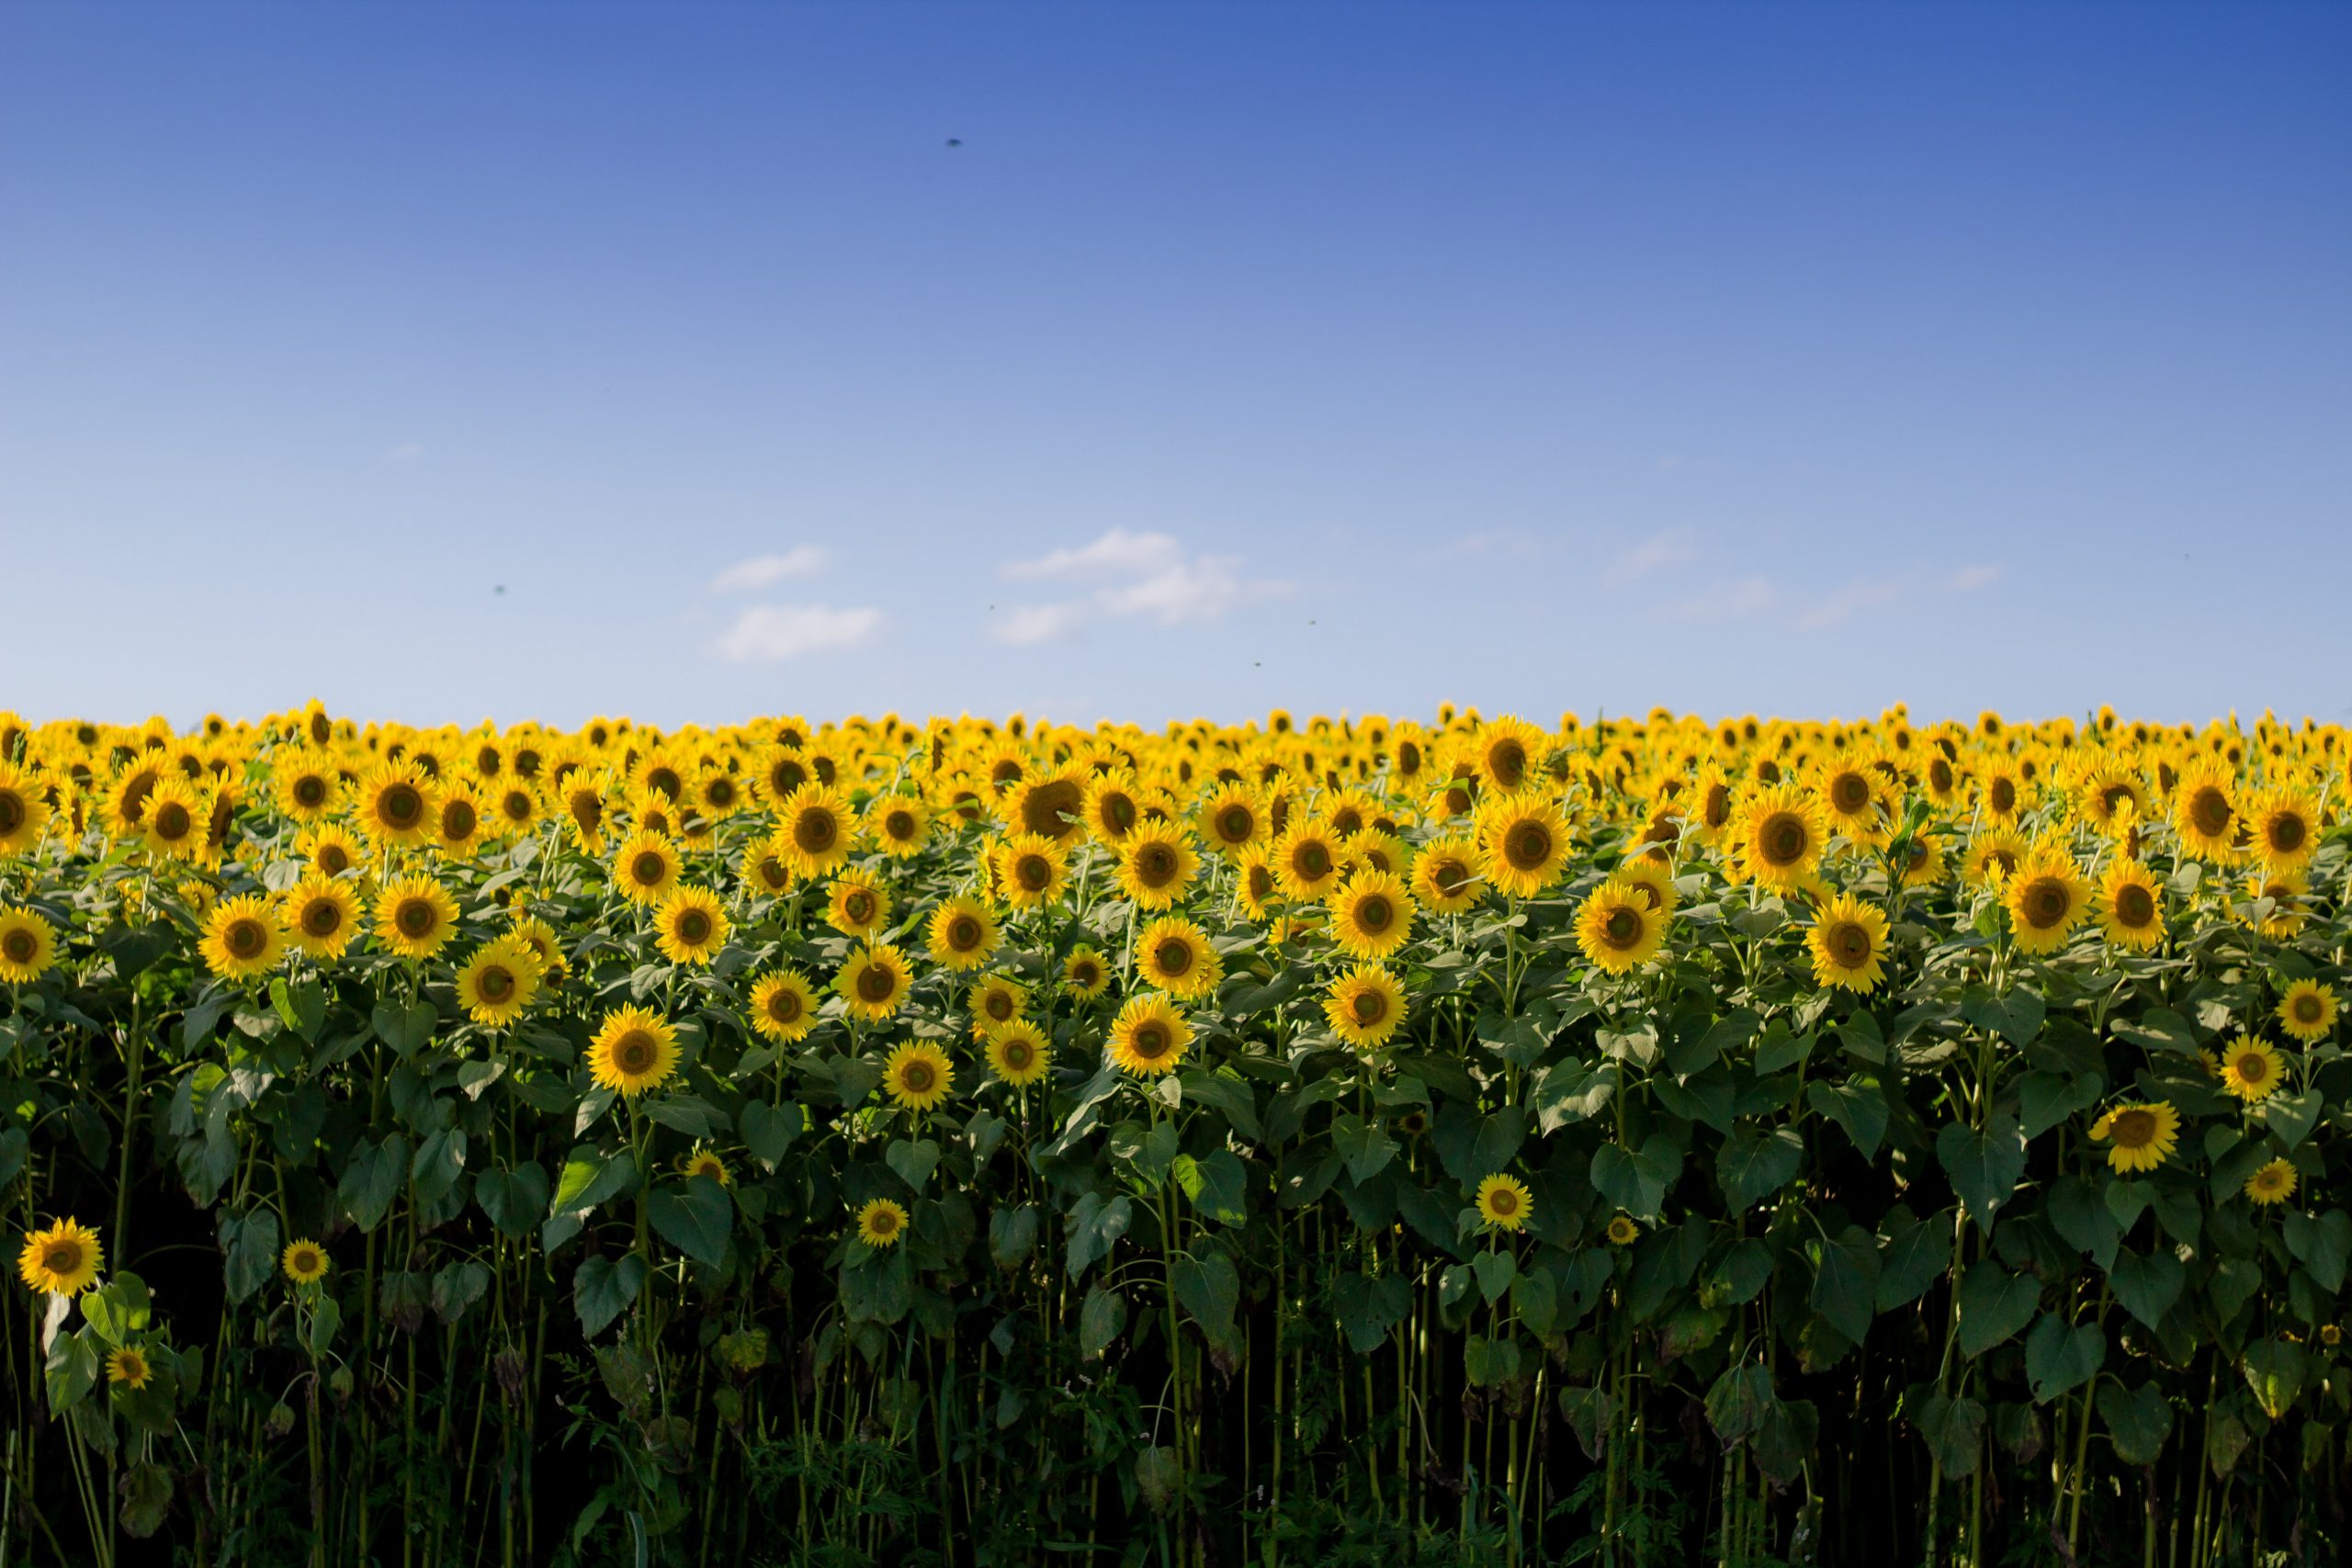 Sunflowers - Bonnie Kittle - unsplash